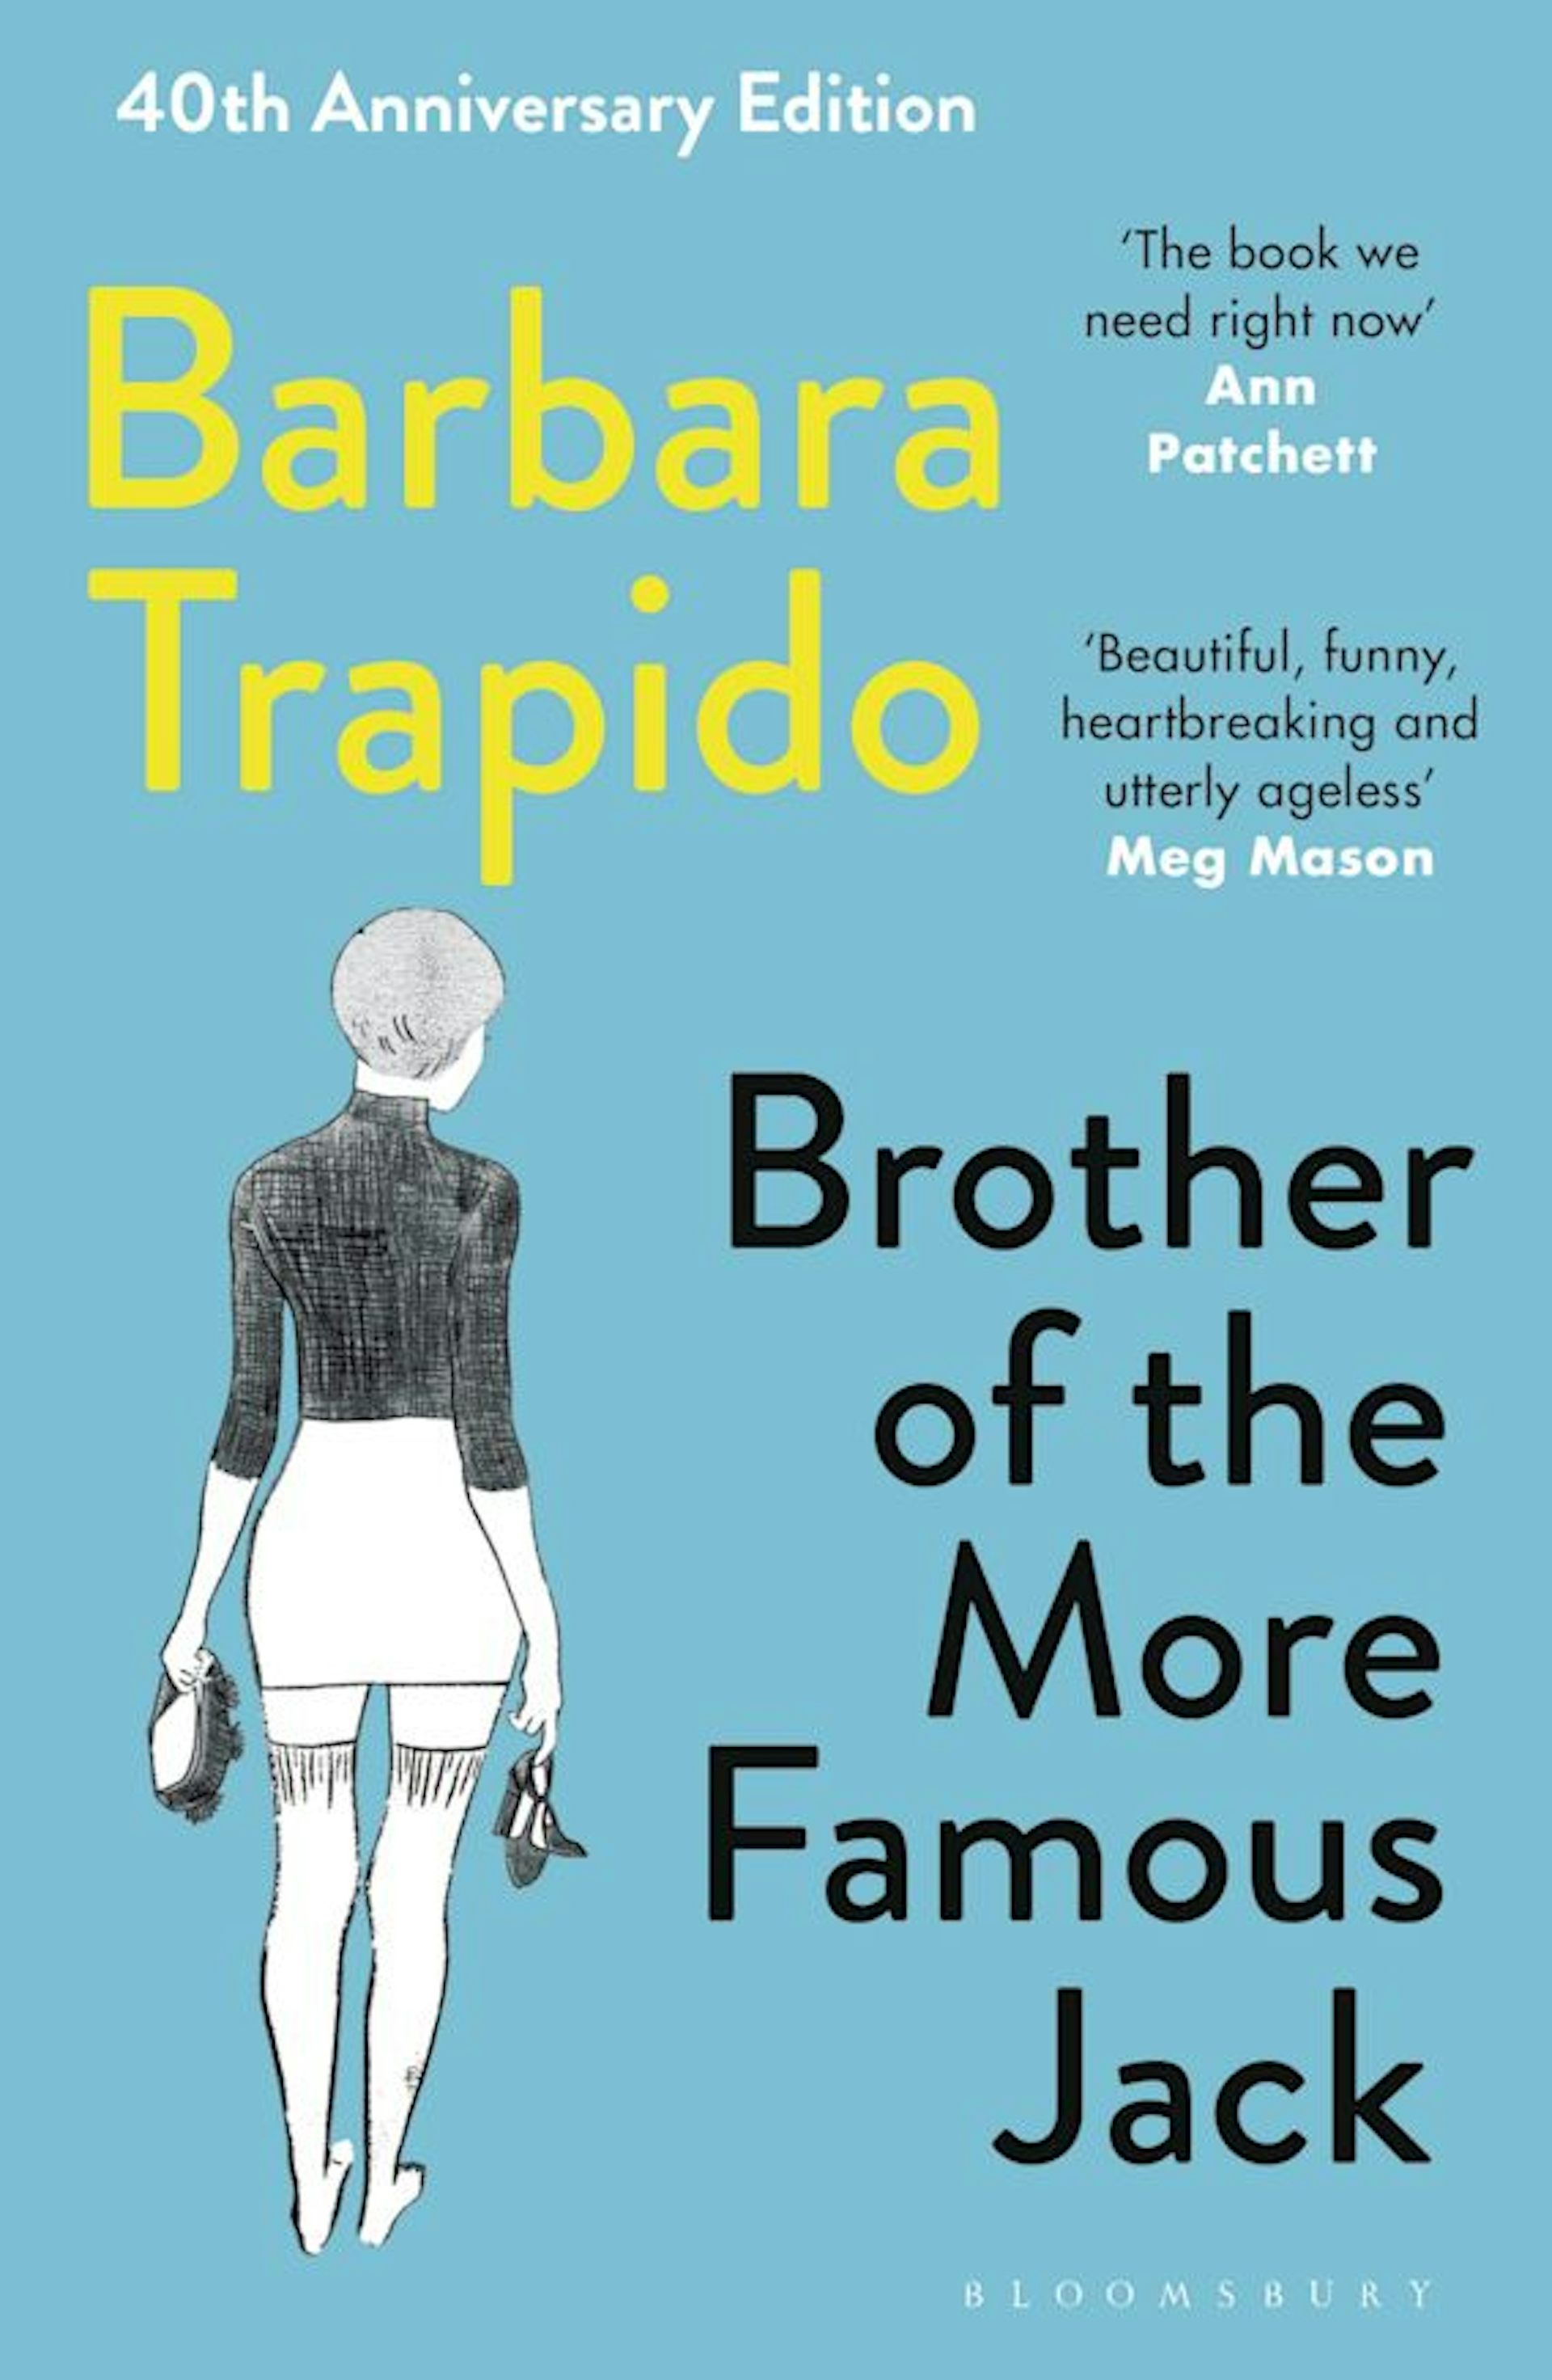 Barbara Trapidos undeniably sexy novel of academic bohemia still dazzles at 40 image